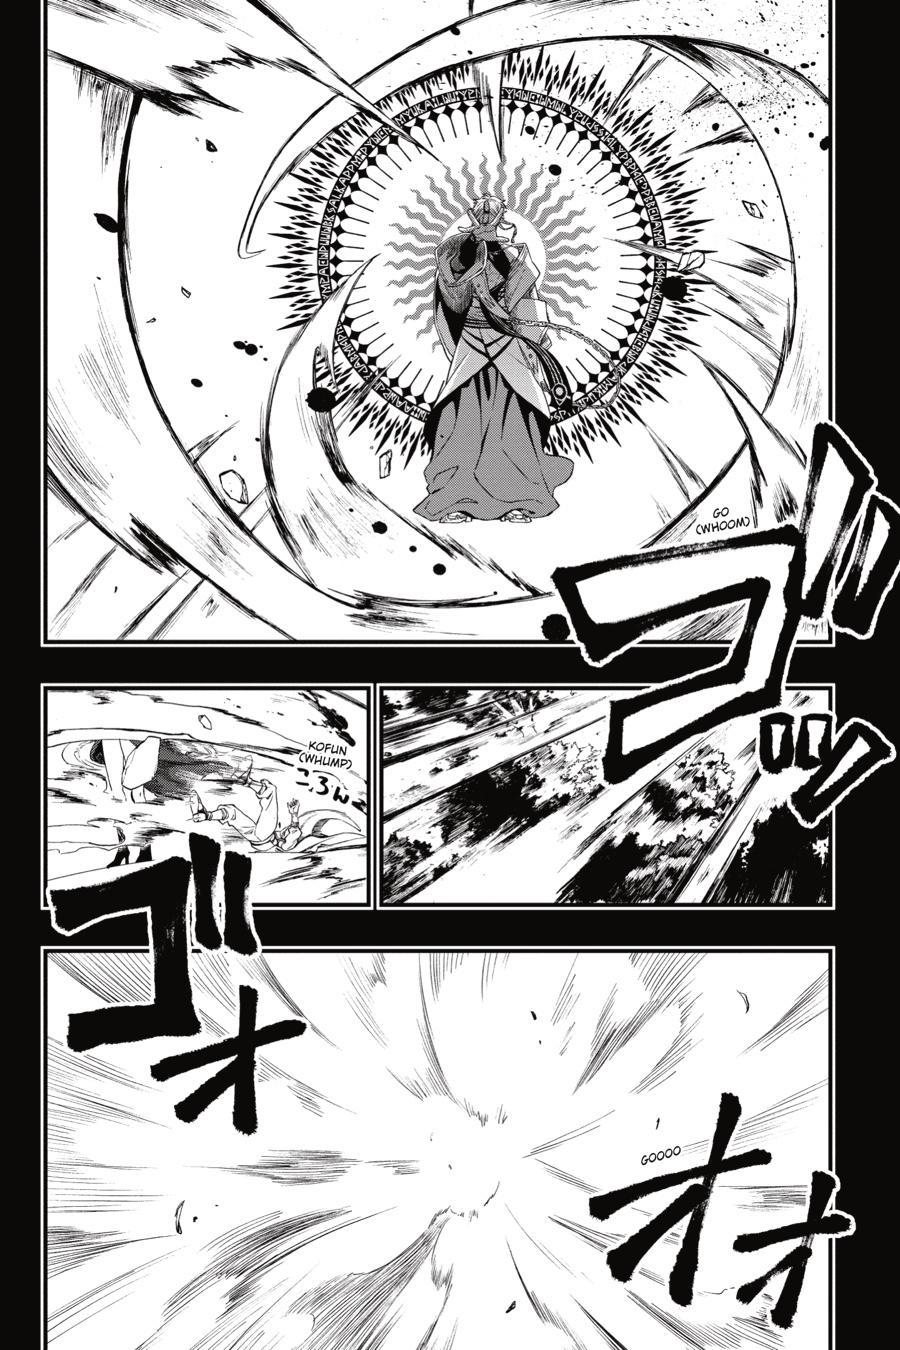 Dead Mount Death Play Capítulo 66 - Manga Online